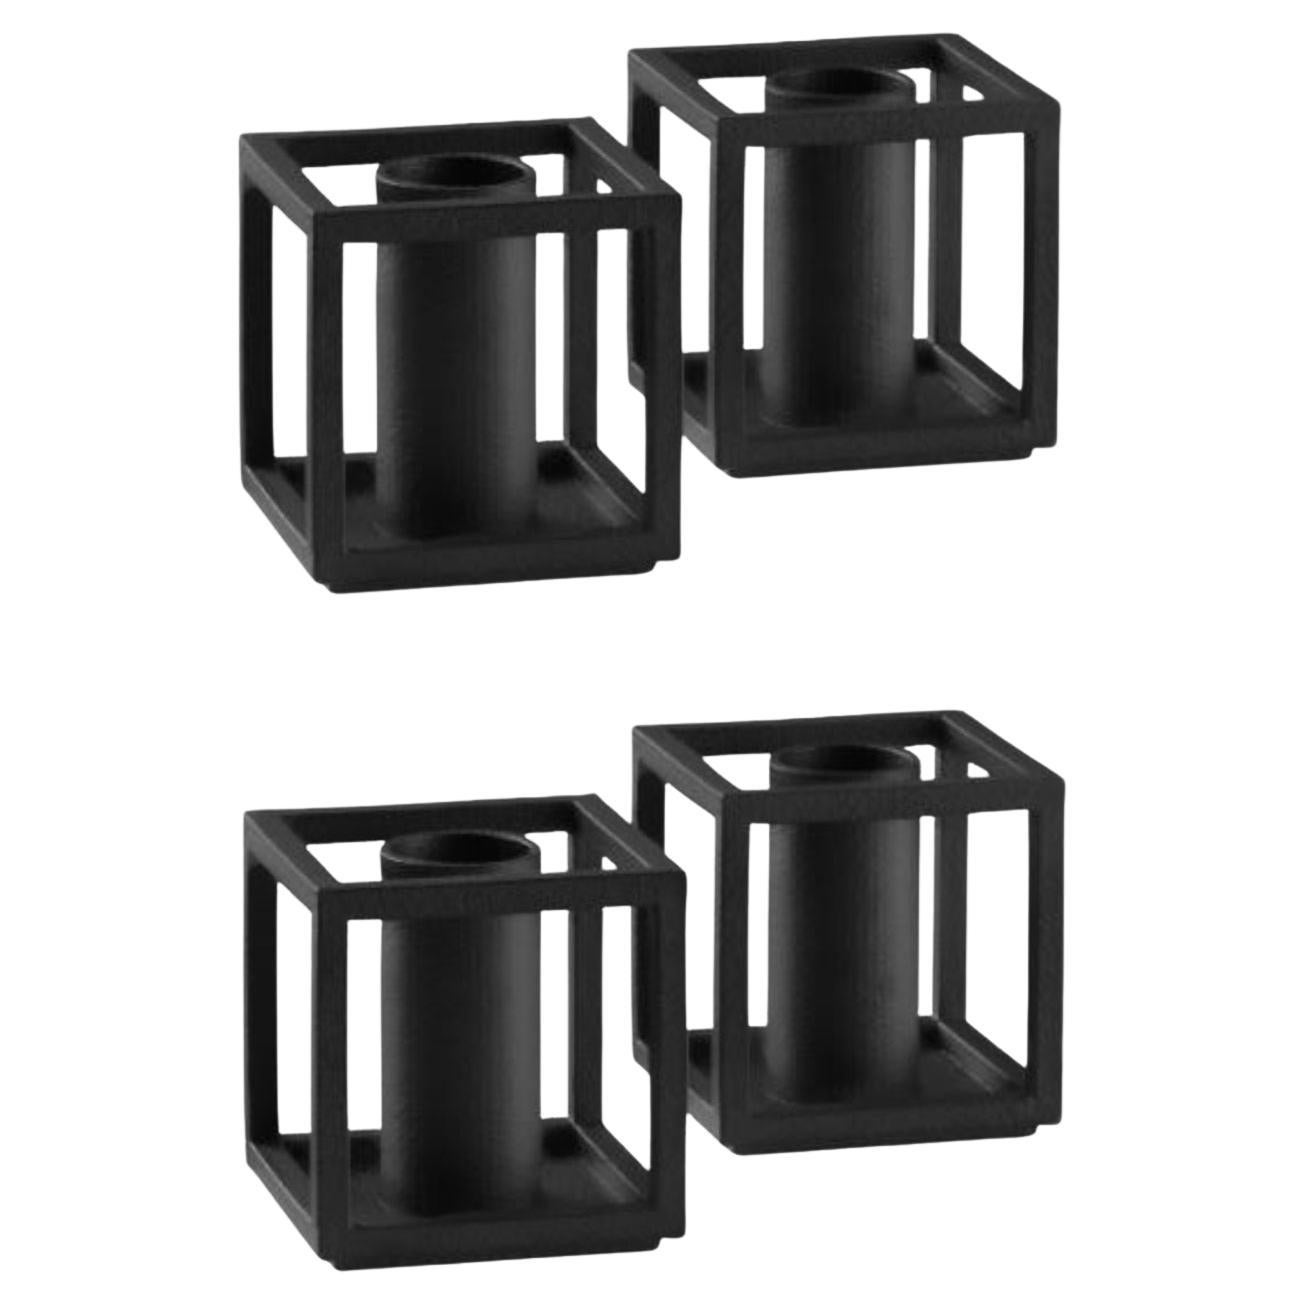 Set of 4 Black Kubus Micro Candle Holders by Lassen